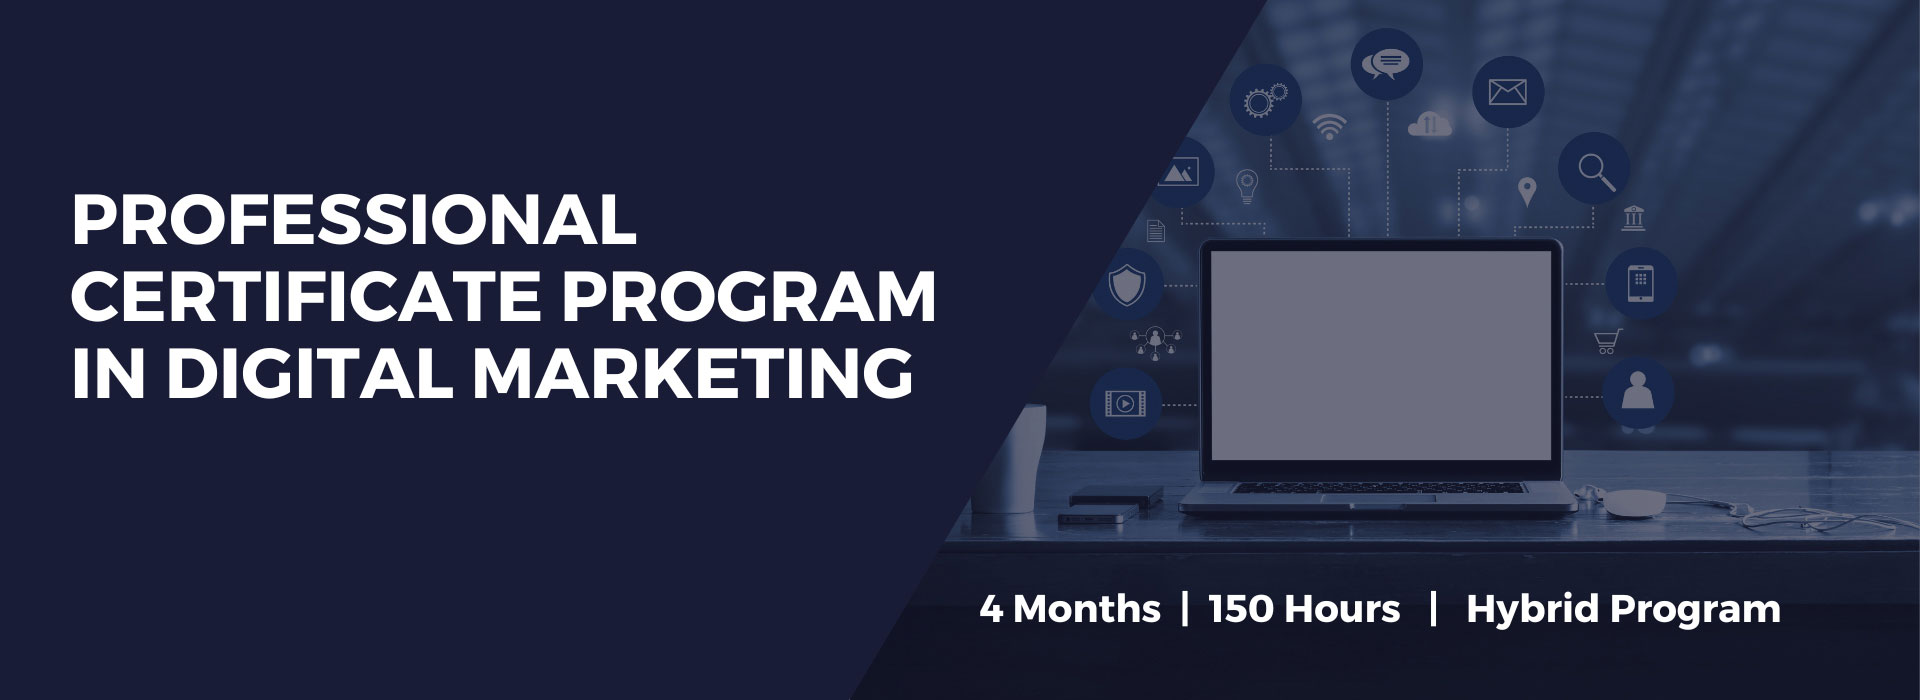 Professional Certificate Program In Digital Marketing